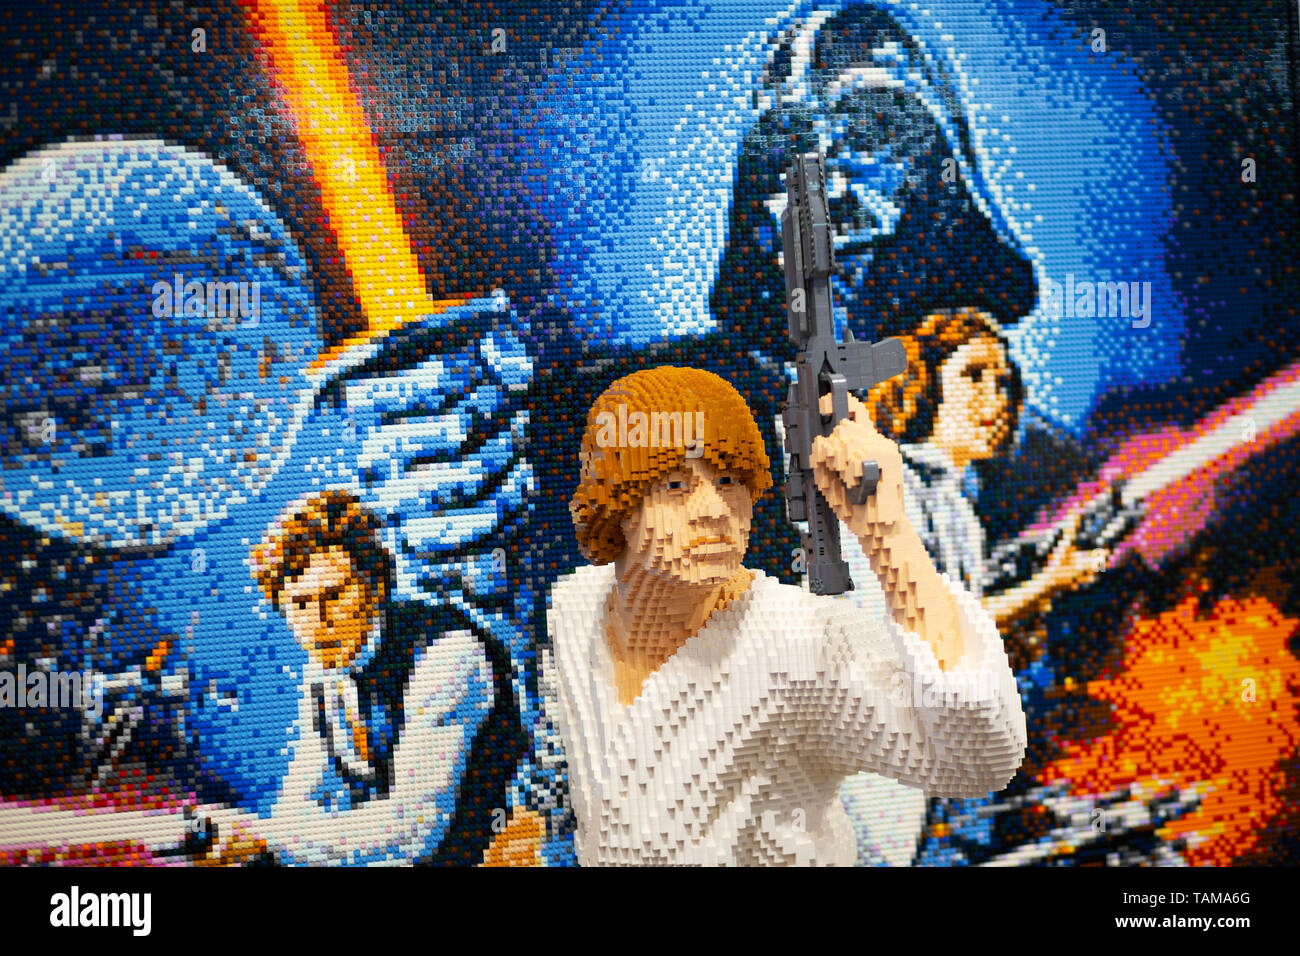 Lego artwork showing Luke Skywalker, Princess Leia, Han Solo, and Darth  Vader at Star Wars Celebration 2019 - Chicago, IL Stock Photo - Alamy